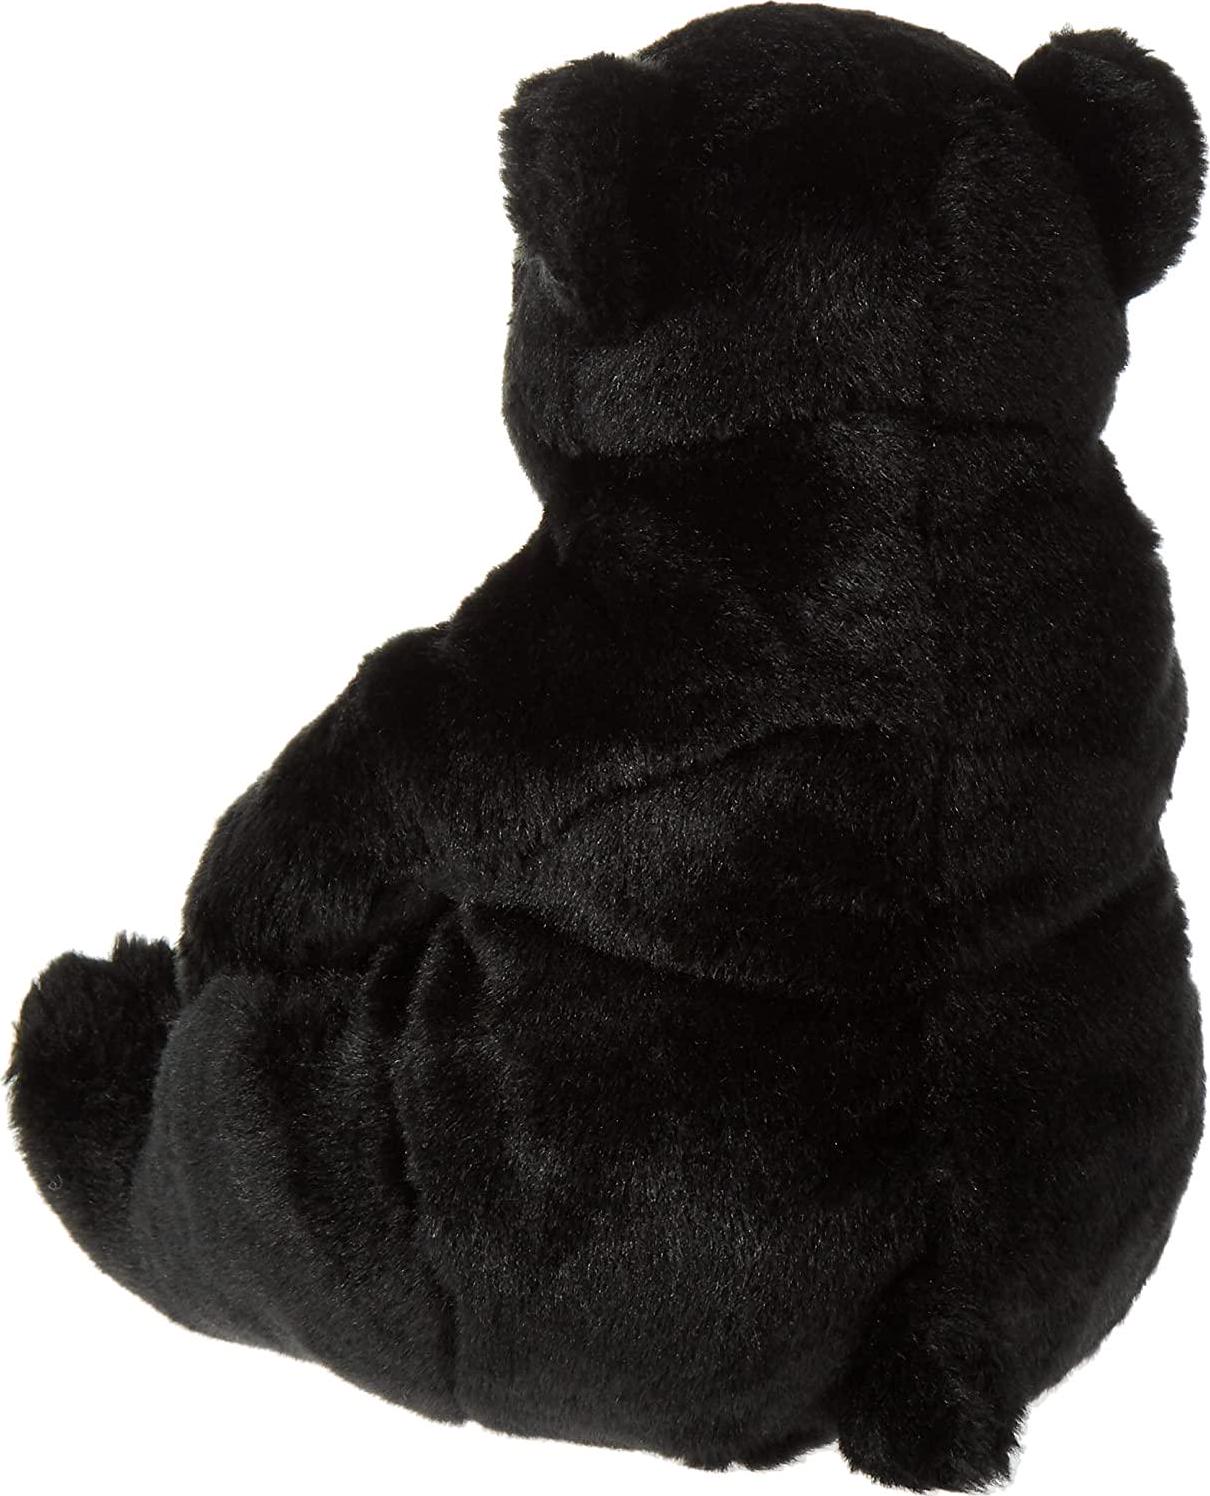 Venturelli, Lelly - National Geographic Basic Collection Plush, Black Bear